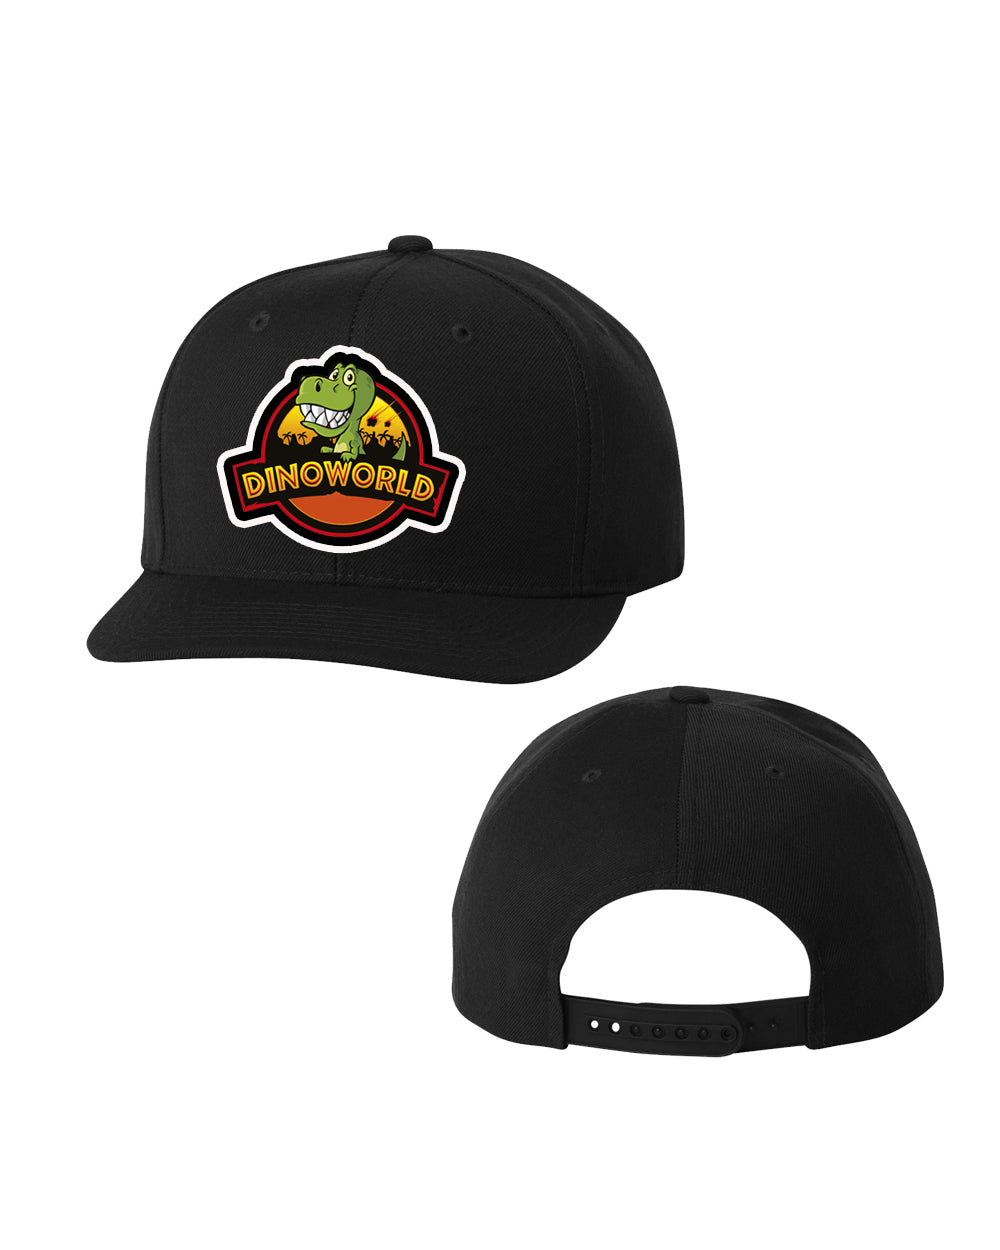 Dinoworld Snapback Hat - Black